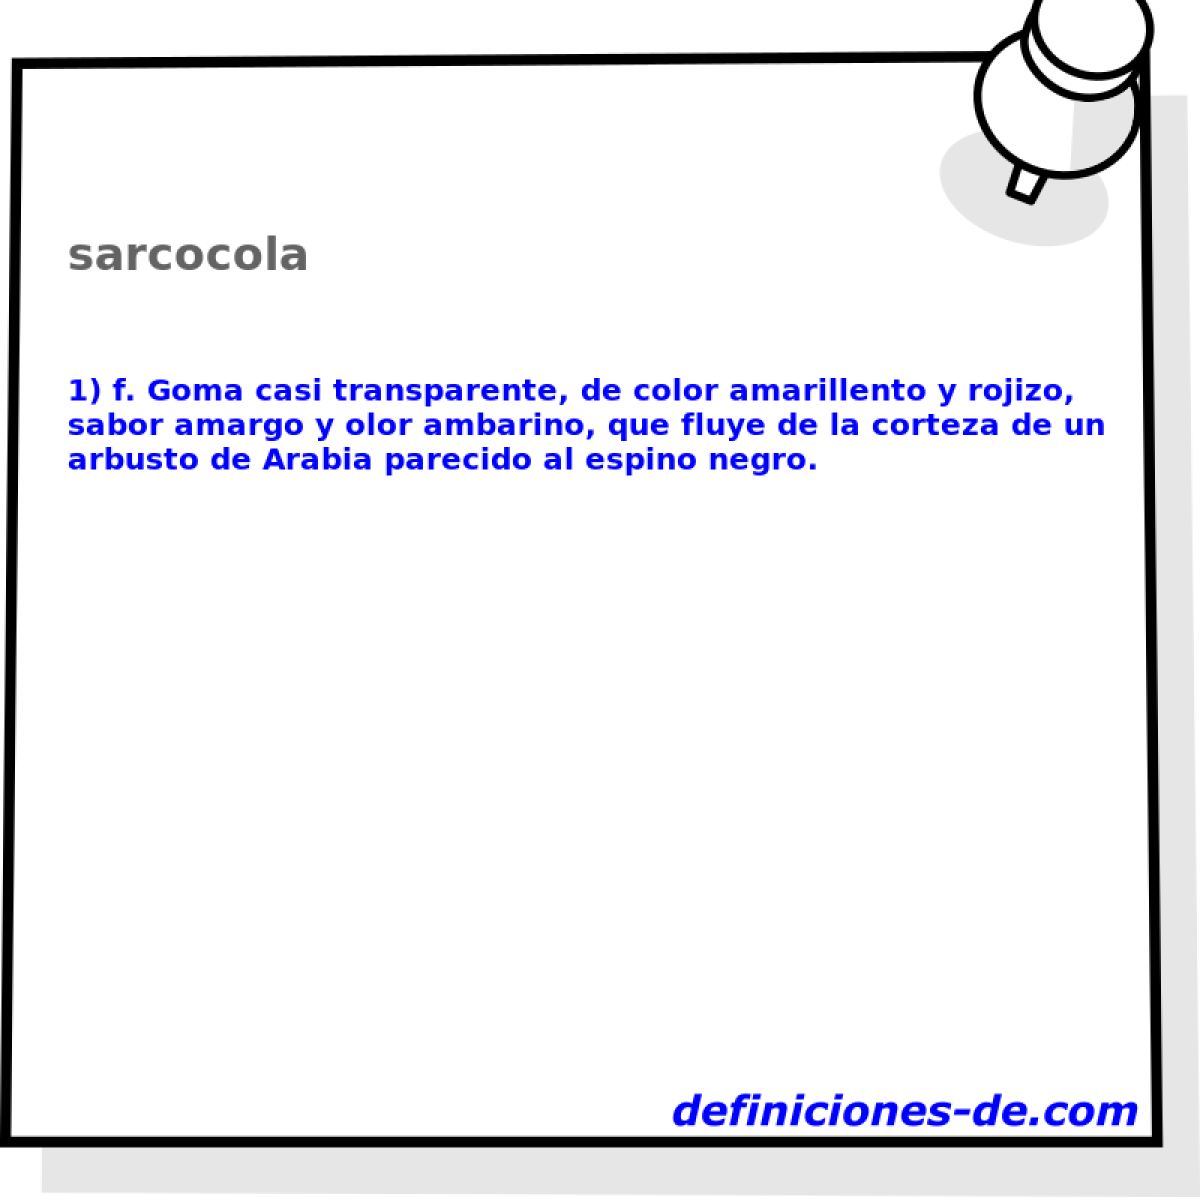 sarcocola 